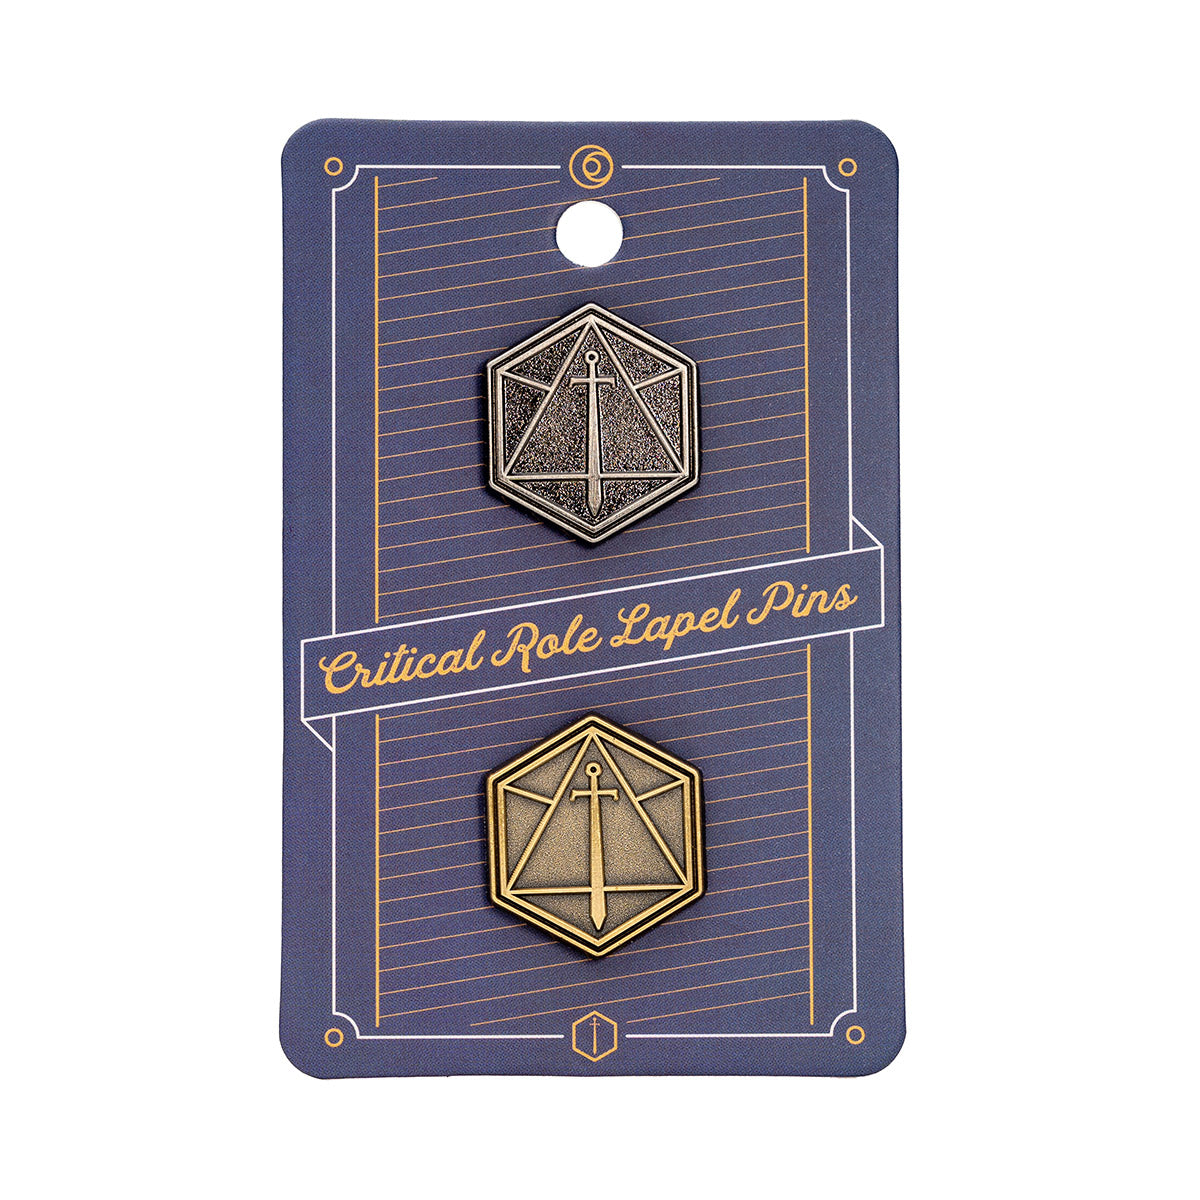 2Pcs/Set Creative Metallic Badge Pins For Accessories, Gift Zinc Alloy